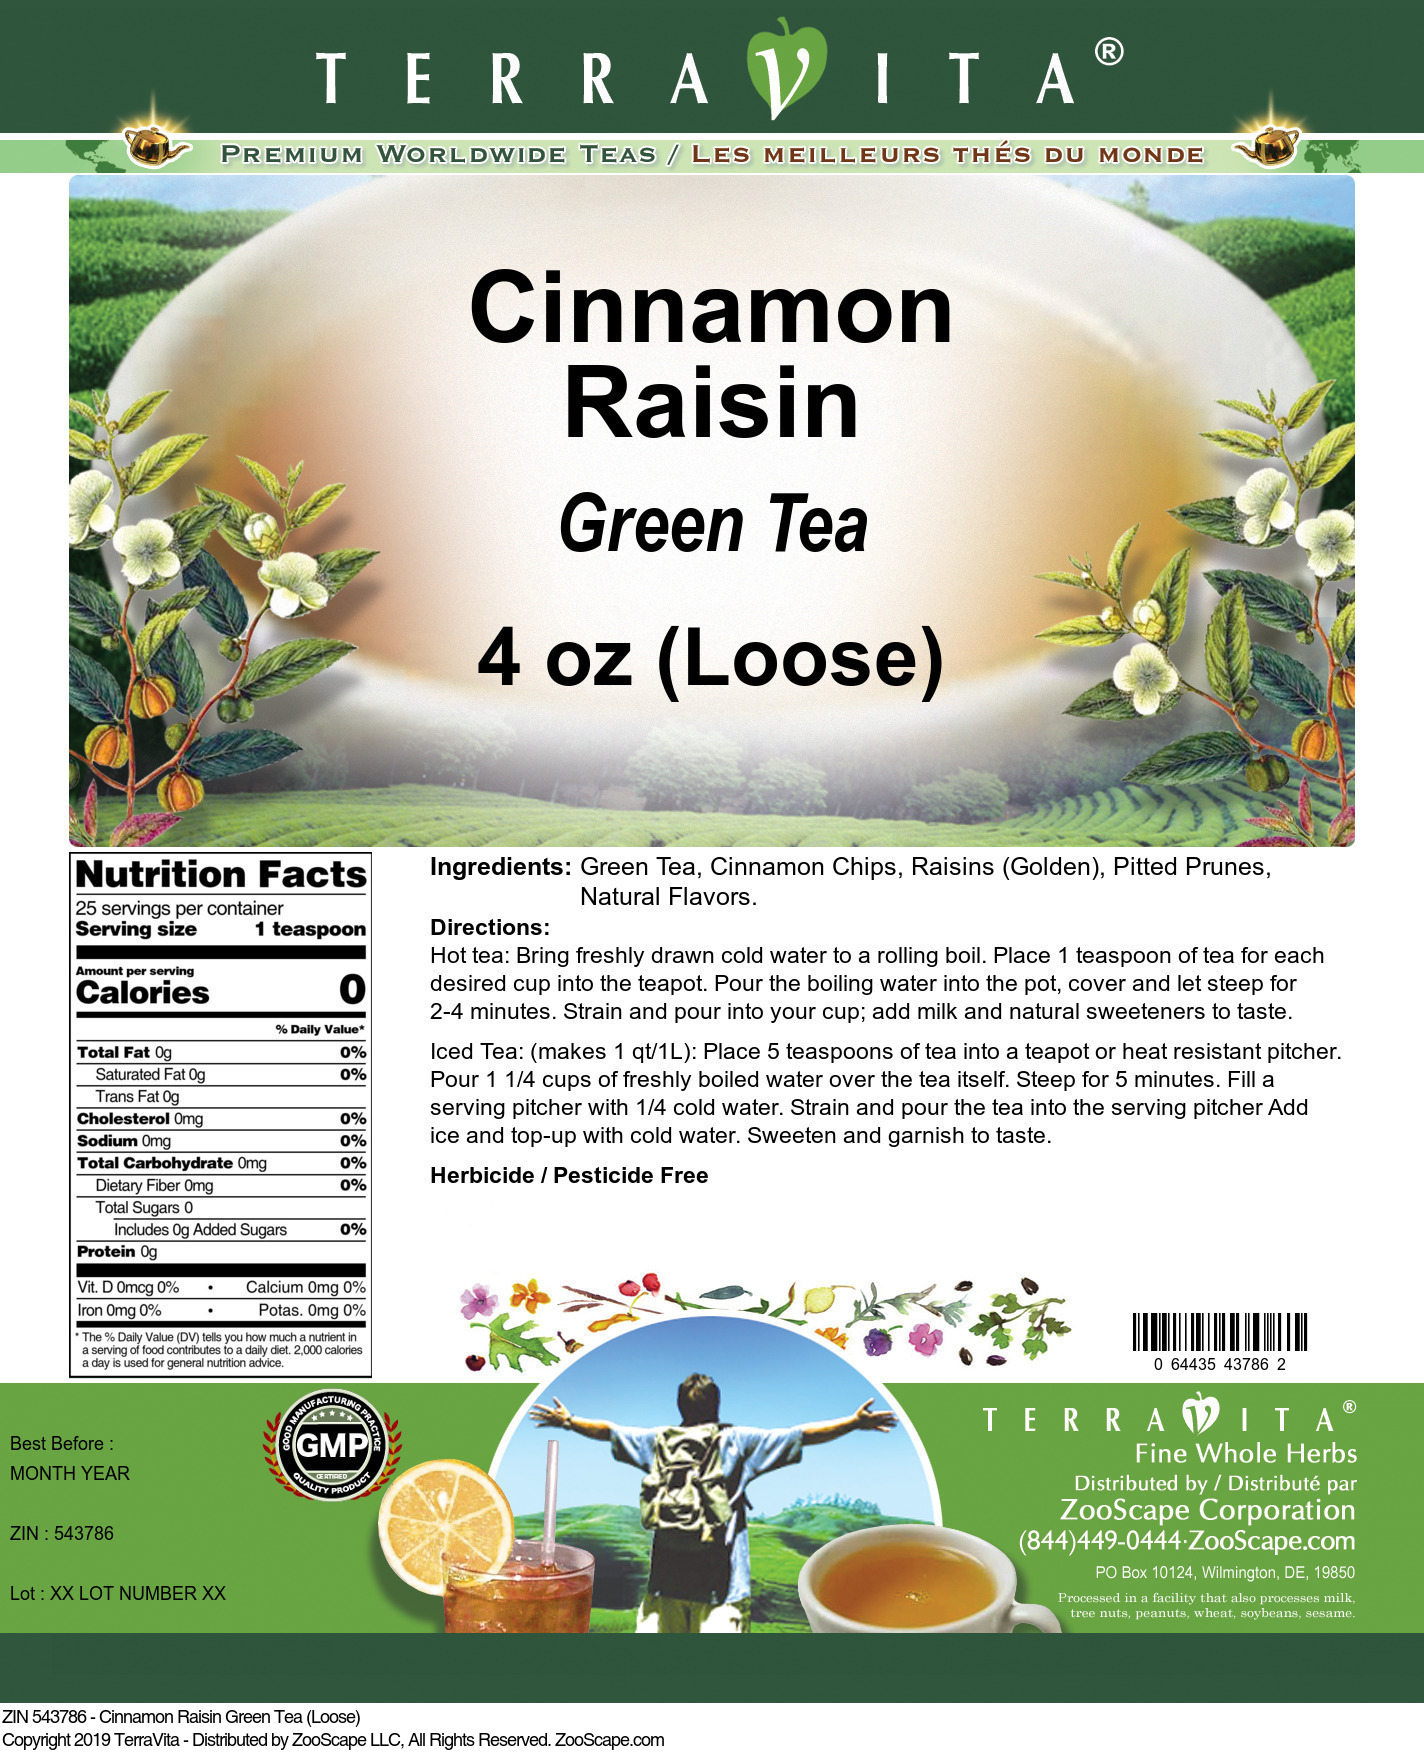 Cinnamon Raisin Green Tea (Loose) - Label